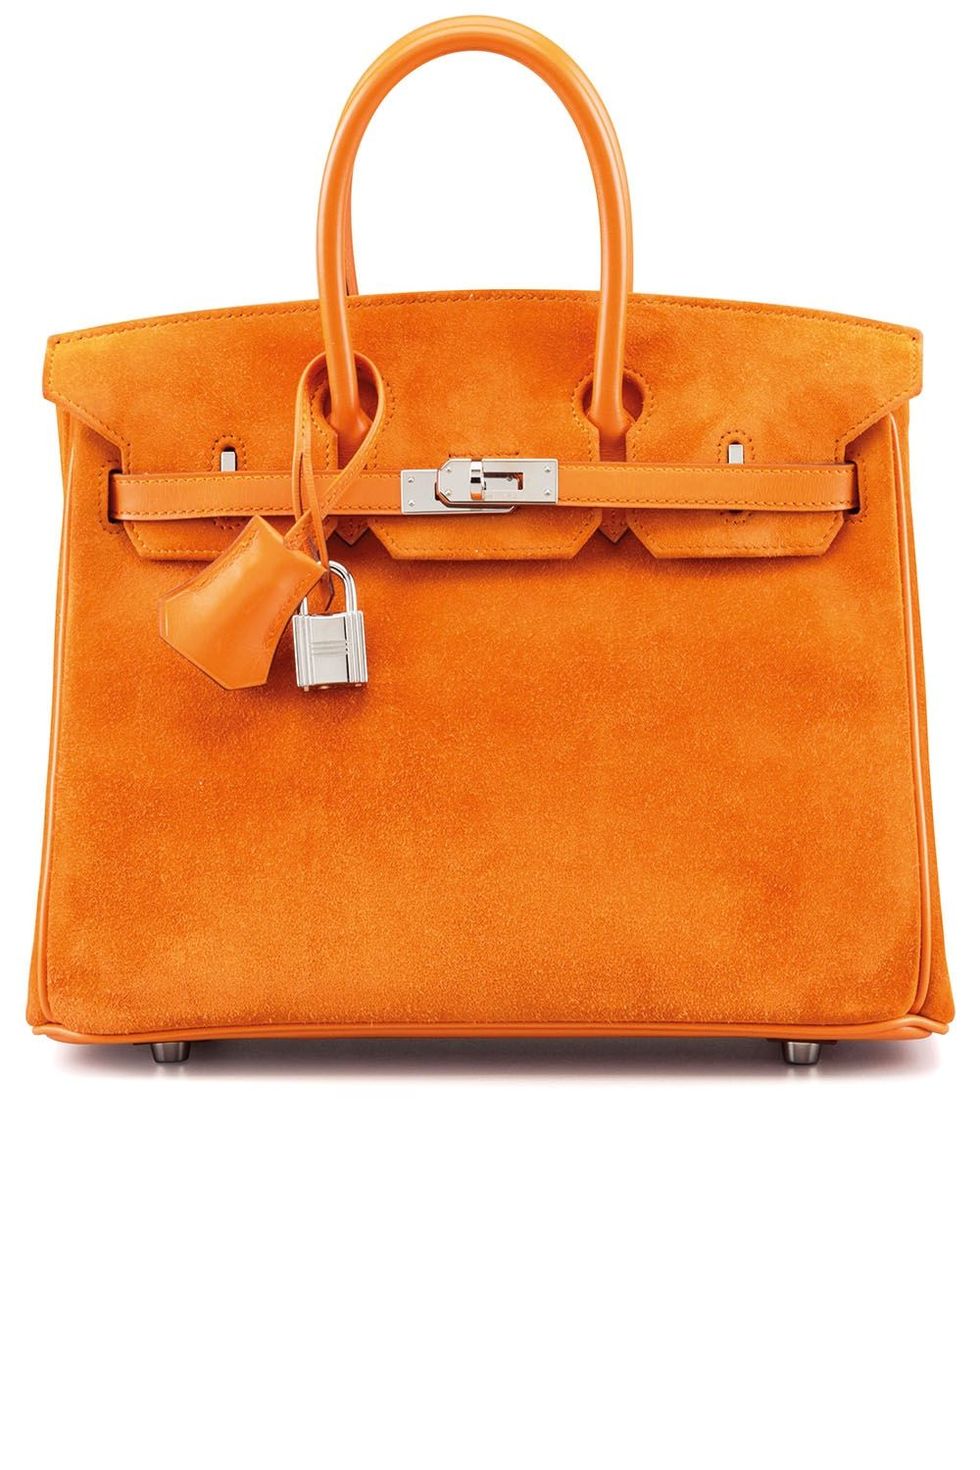 Handbag, Bag, Leather, Fashion accessory, Orange, Birkin bag, Yellow, Tan, Brown, Kelly bag, 